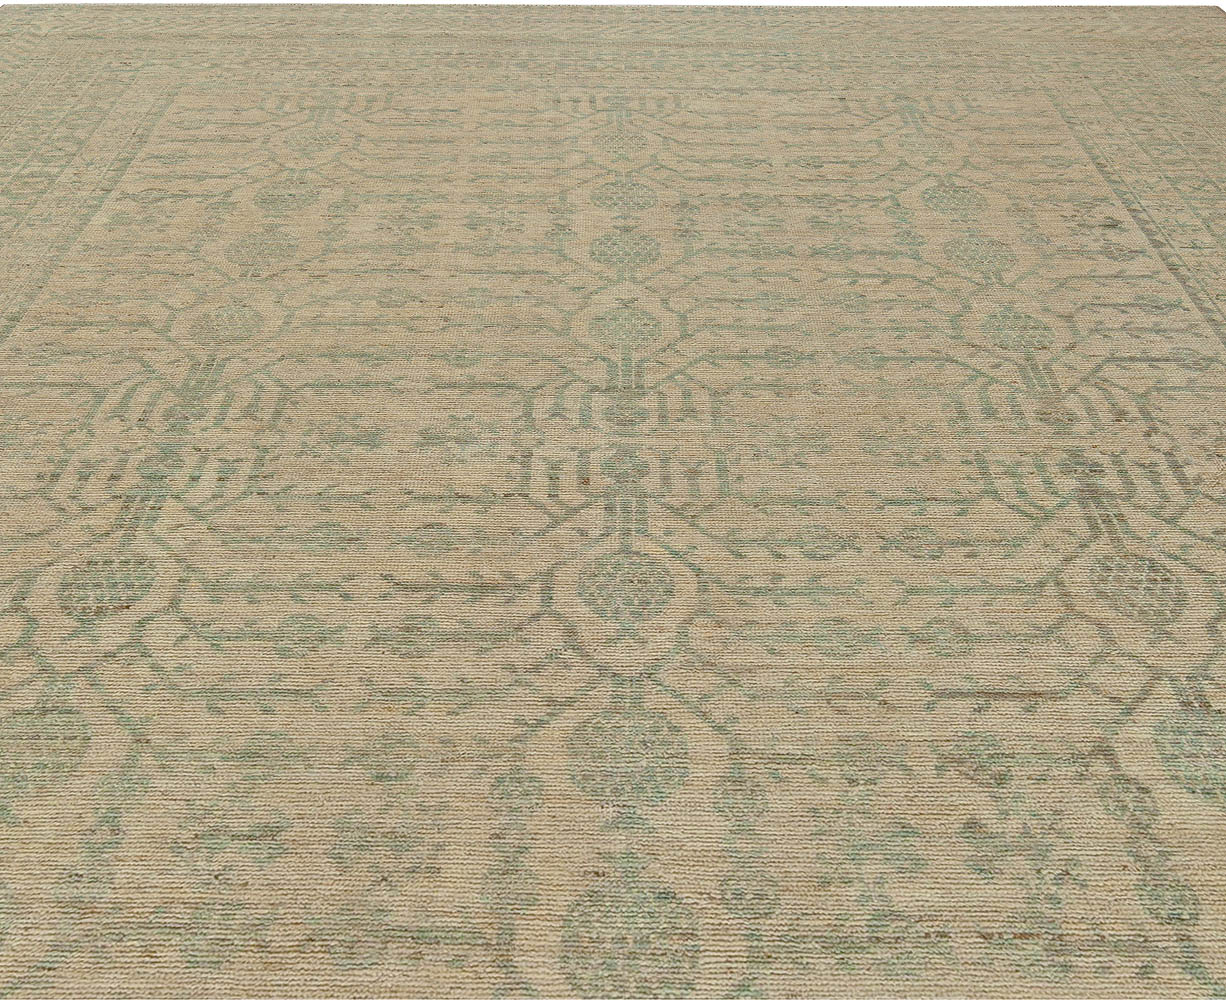 Doris Leslie Blau Collection Modern Samarkand Taupe, Gray Handmade Wool Rug N11061